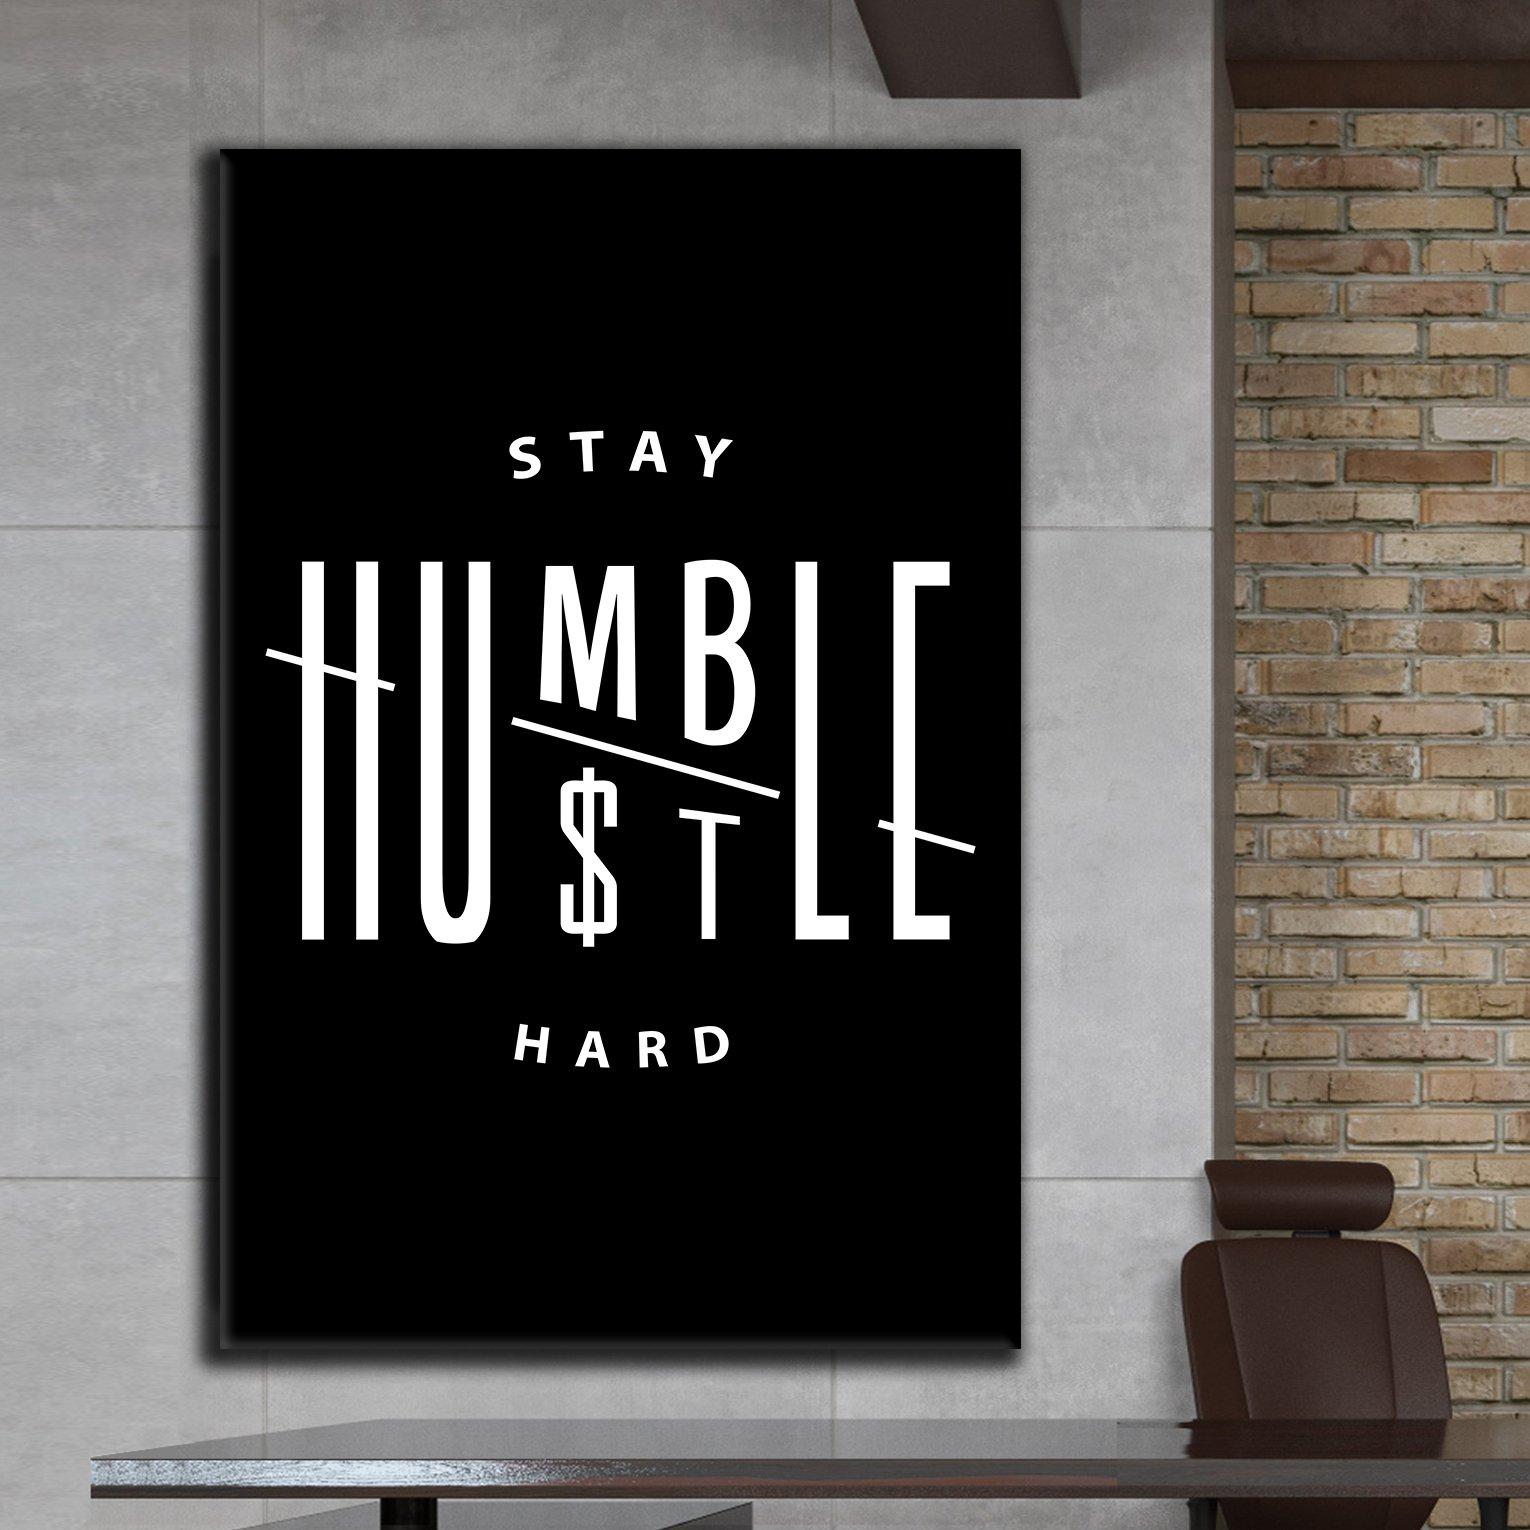 Stay Humble Hustle Hard Wallpapers - Top Free Stay Humble Hustle Hard ...